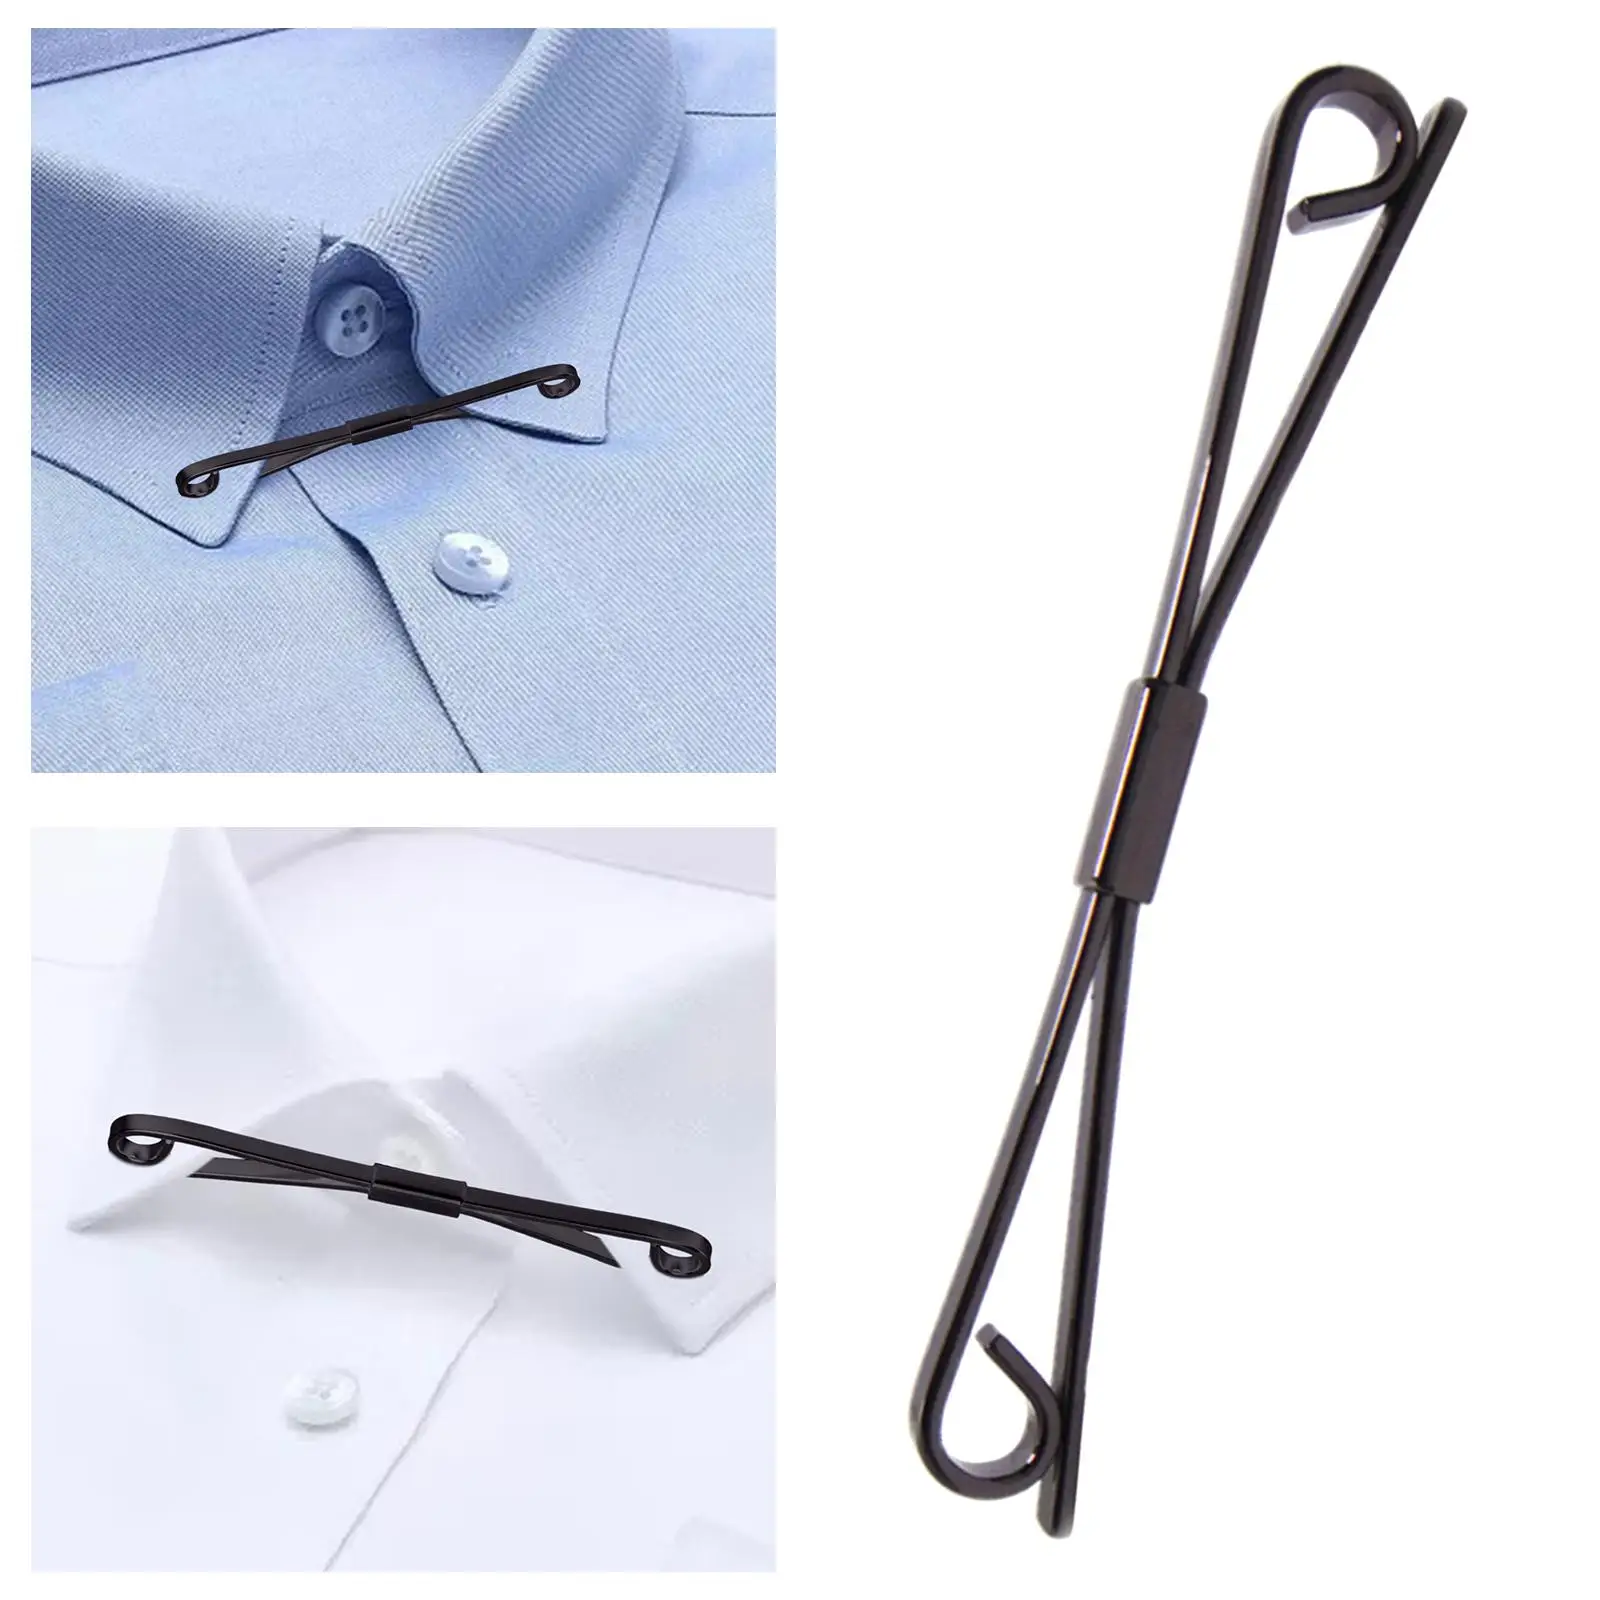 Classic Tie Collar Bar Pin,  Pinch  Pin Tie Clips Shirt  for Men Business Wedding Gifts